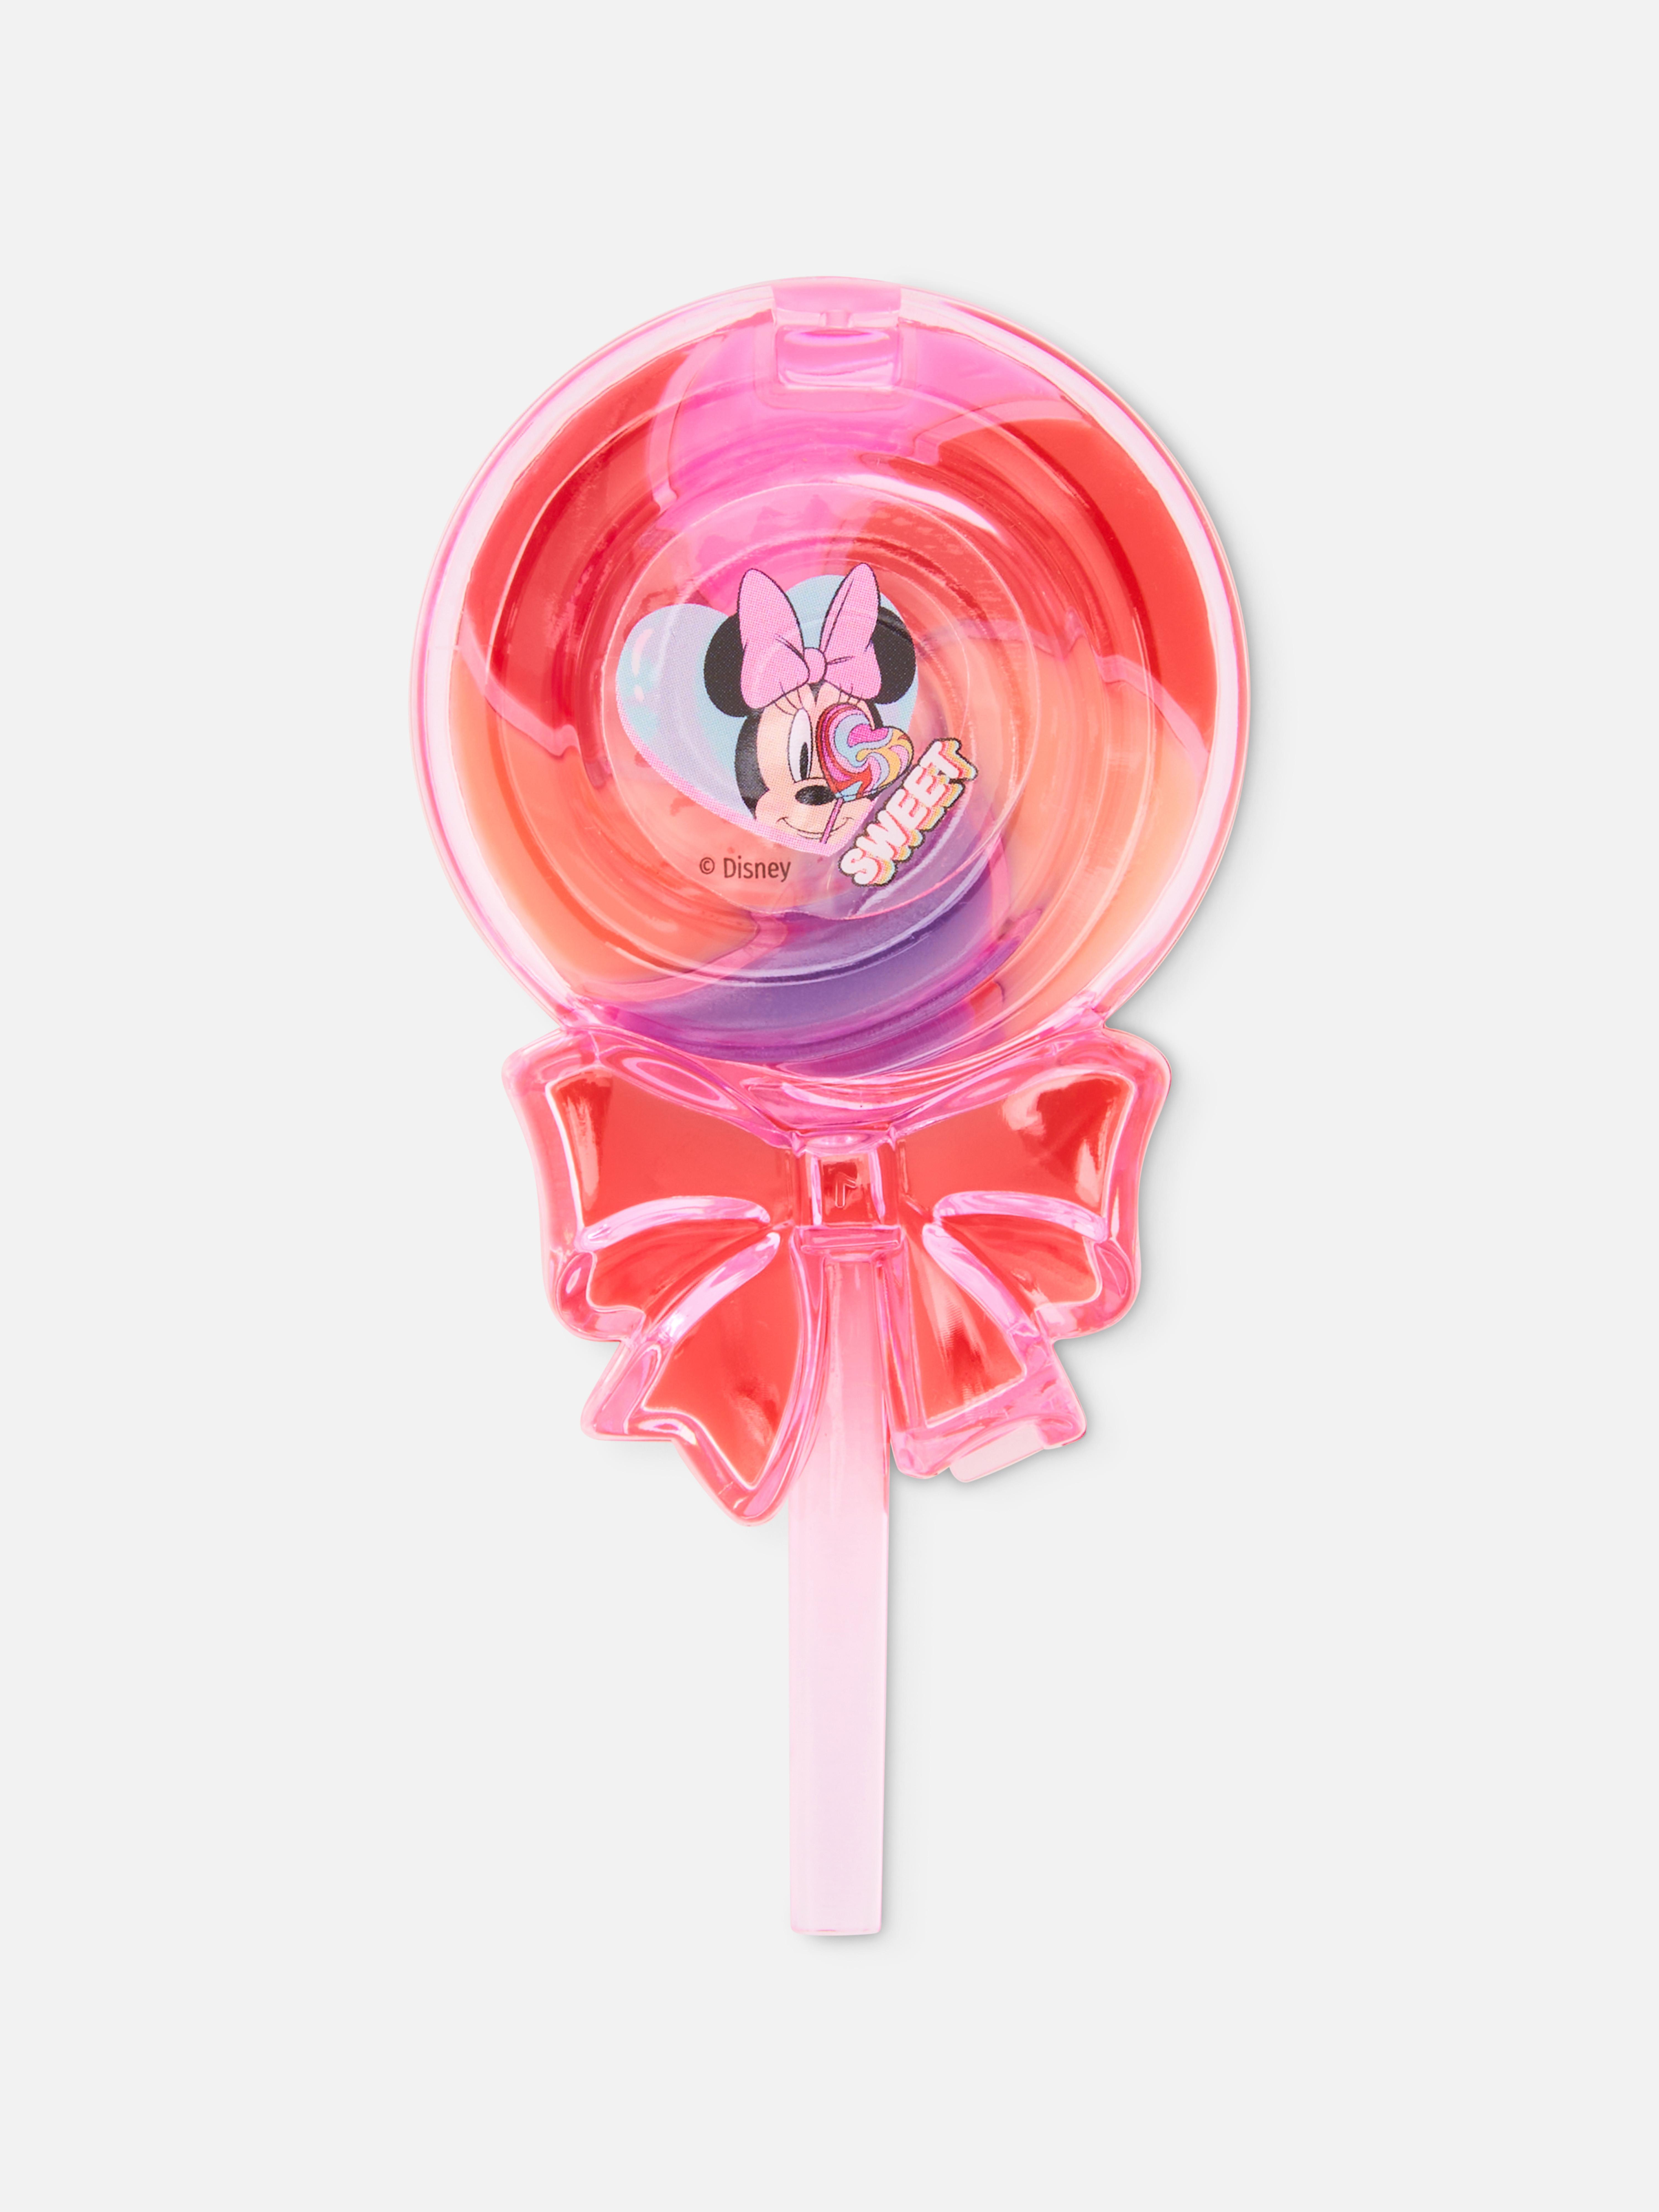 Disney’s Minnie Mouse Sweetie Lip Palette